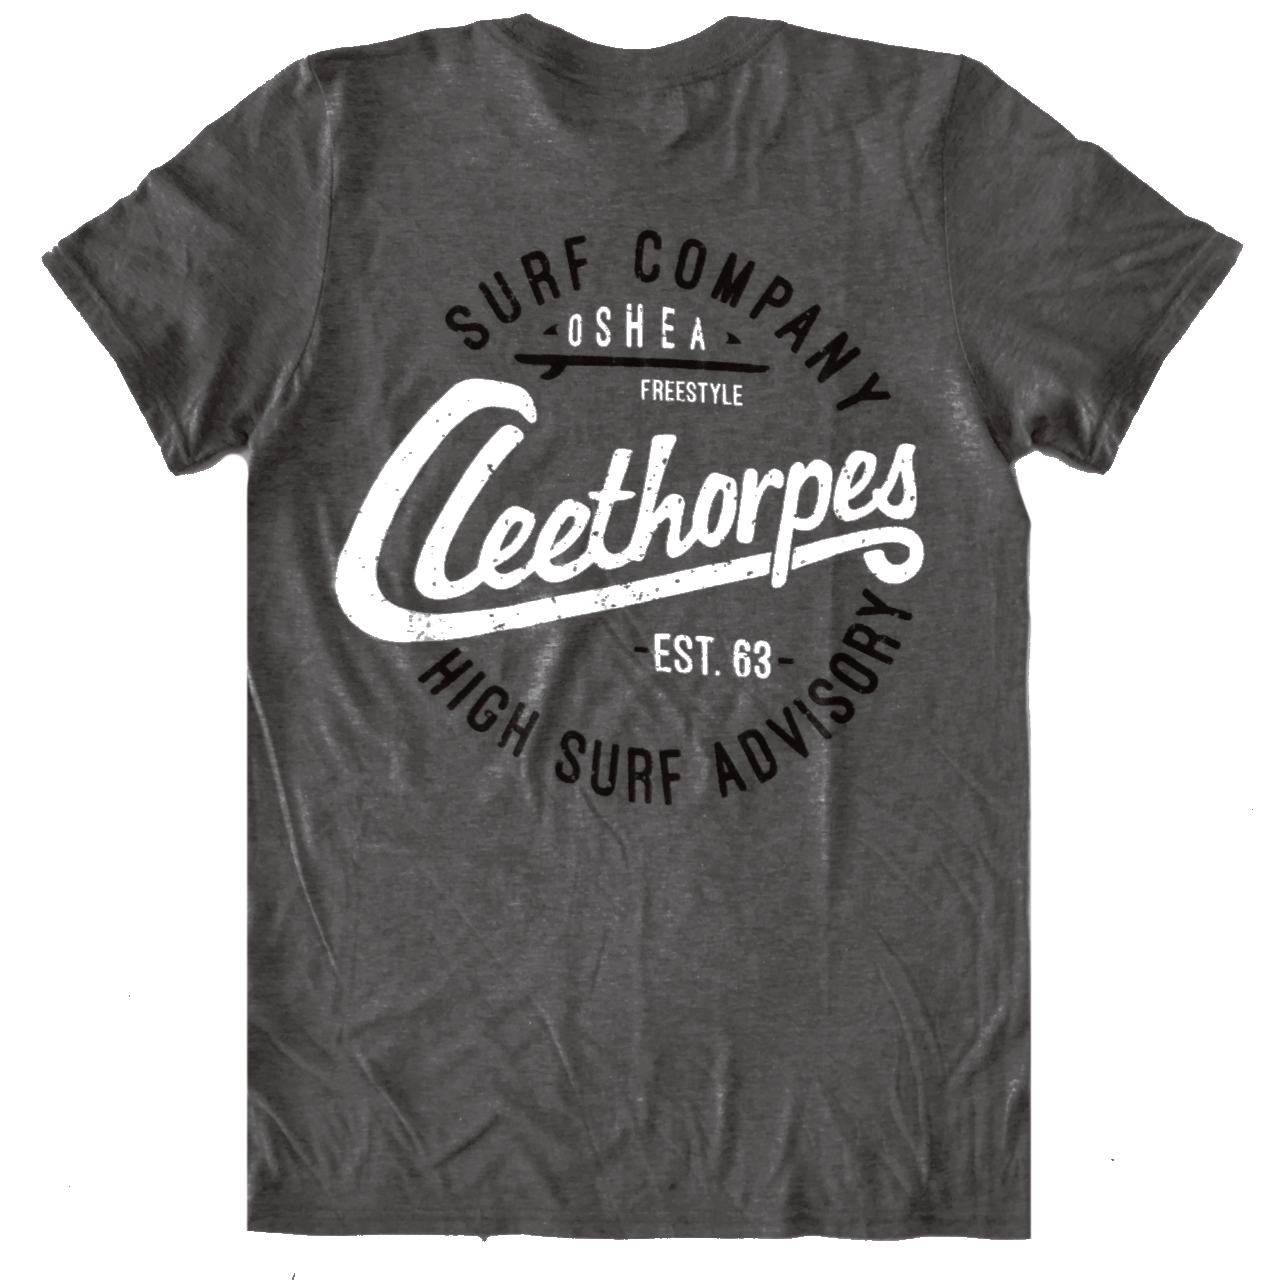 Cleethorpes "HIGH SURF" T-Shirt